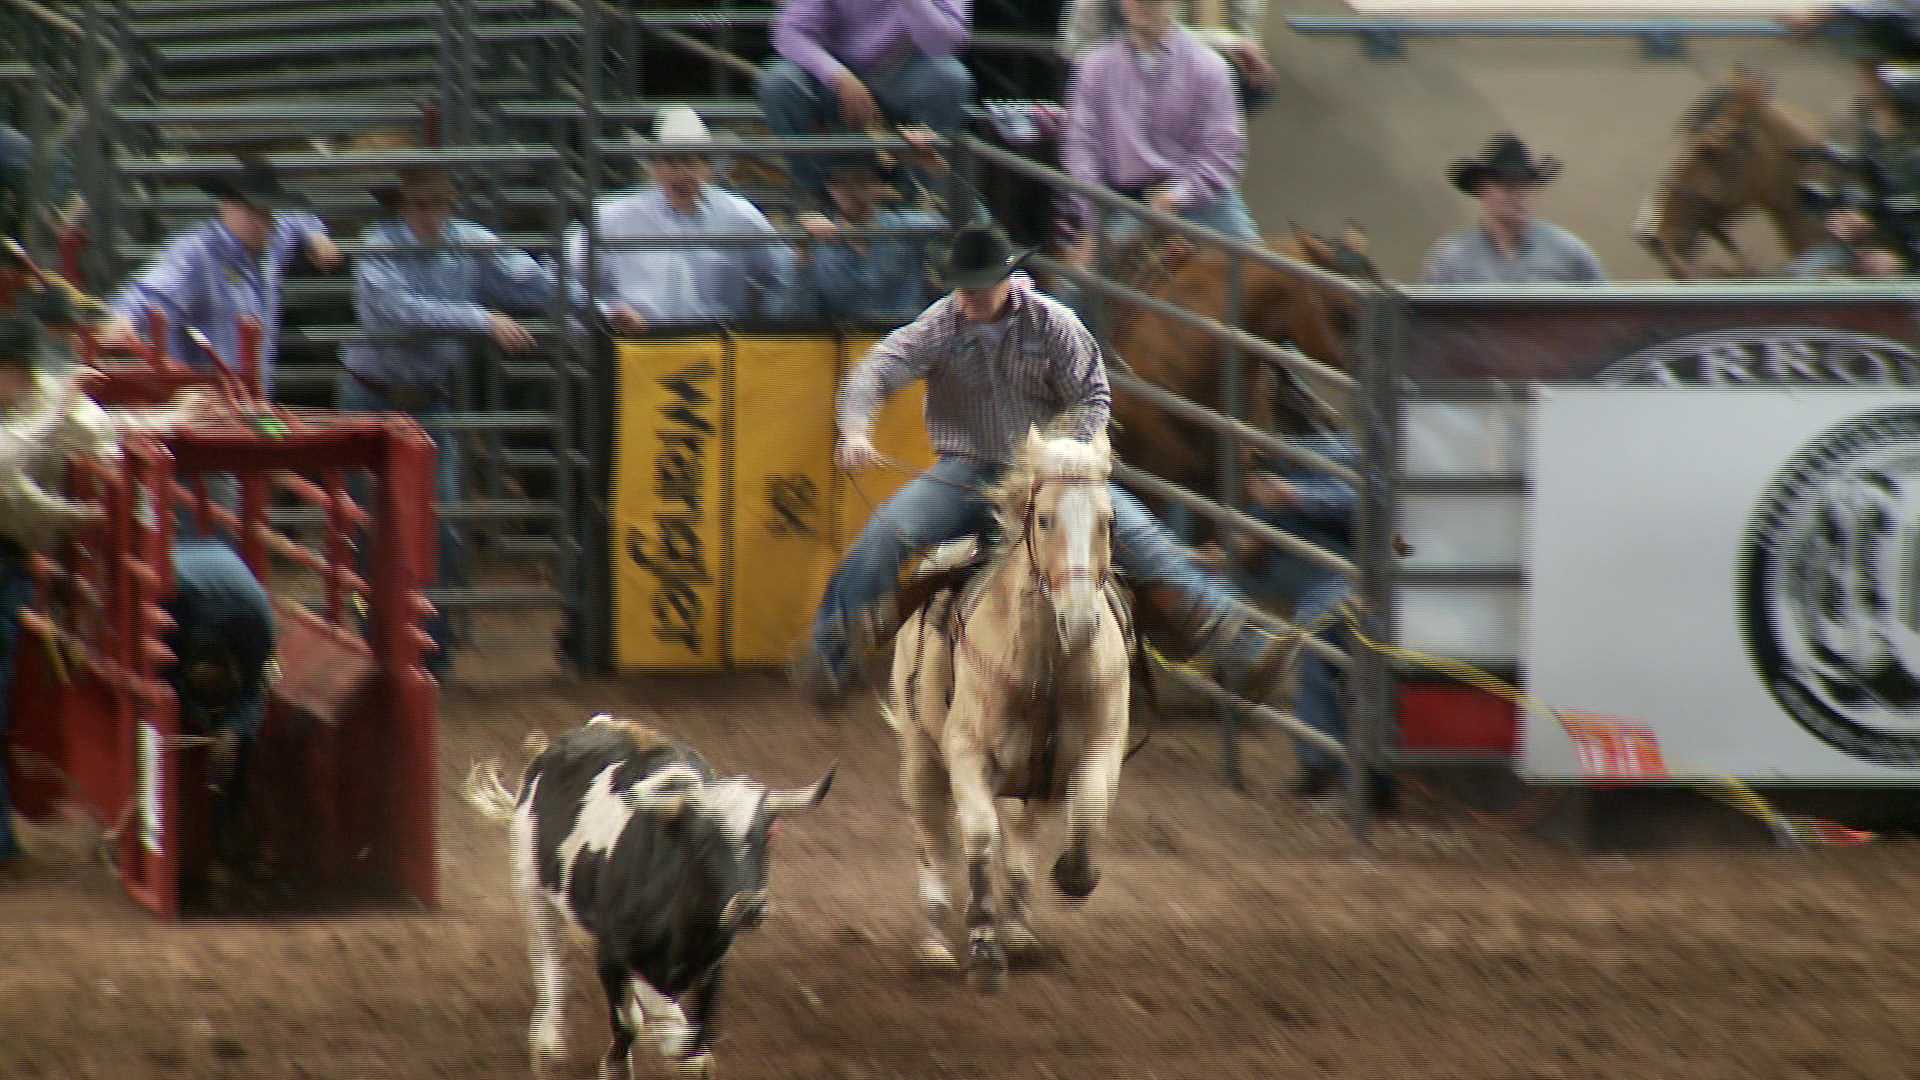 Cowboys upset with PRCA rule change for calf roping. KFOR.com Oklahoma City